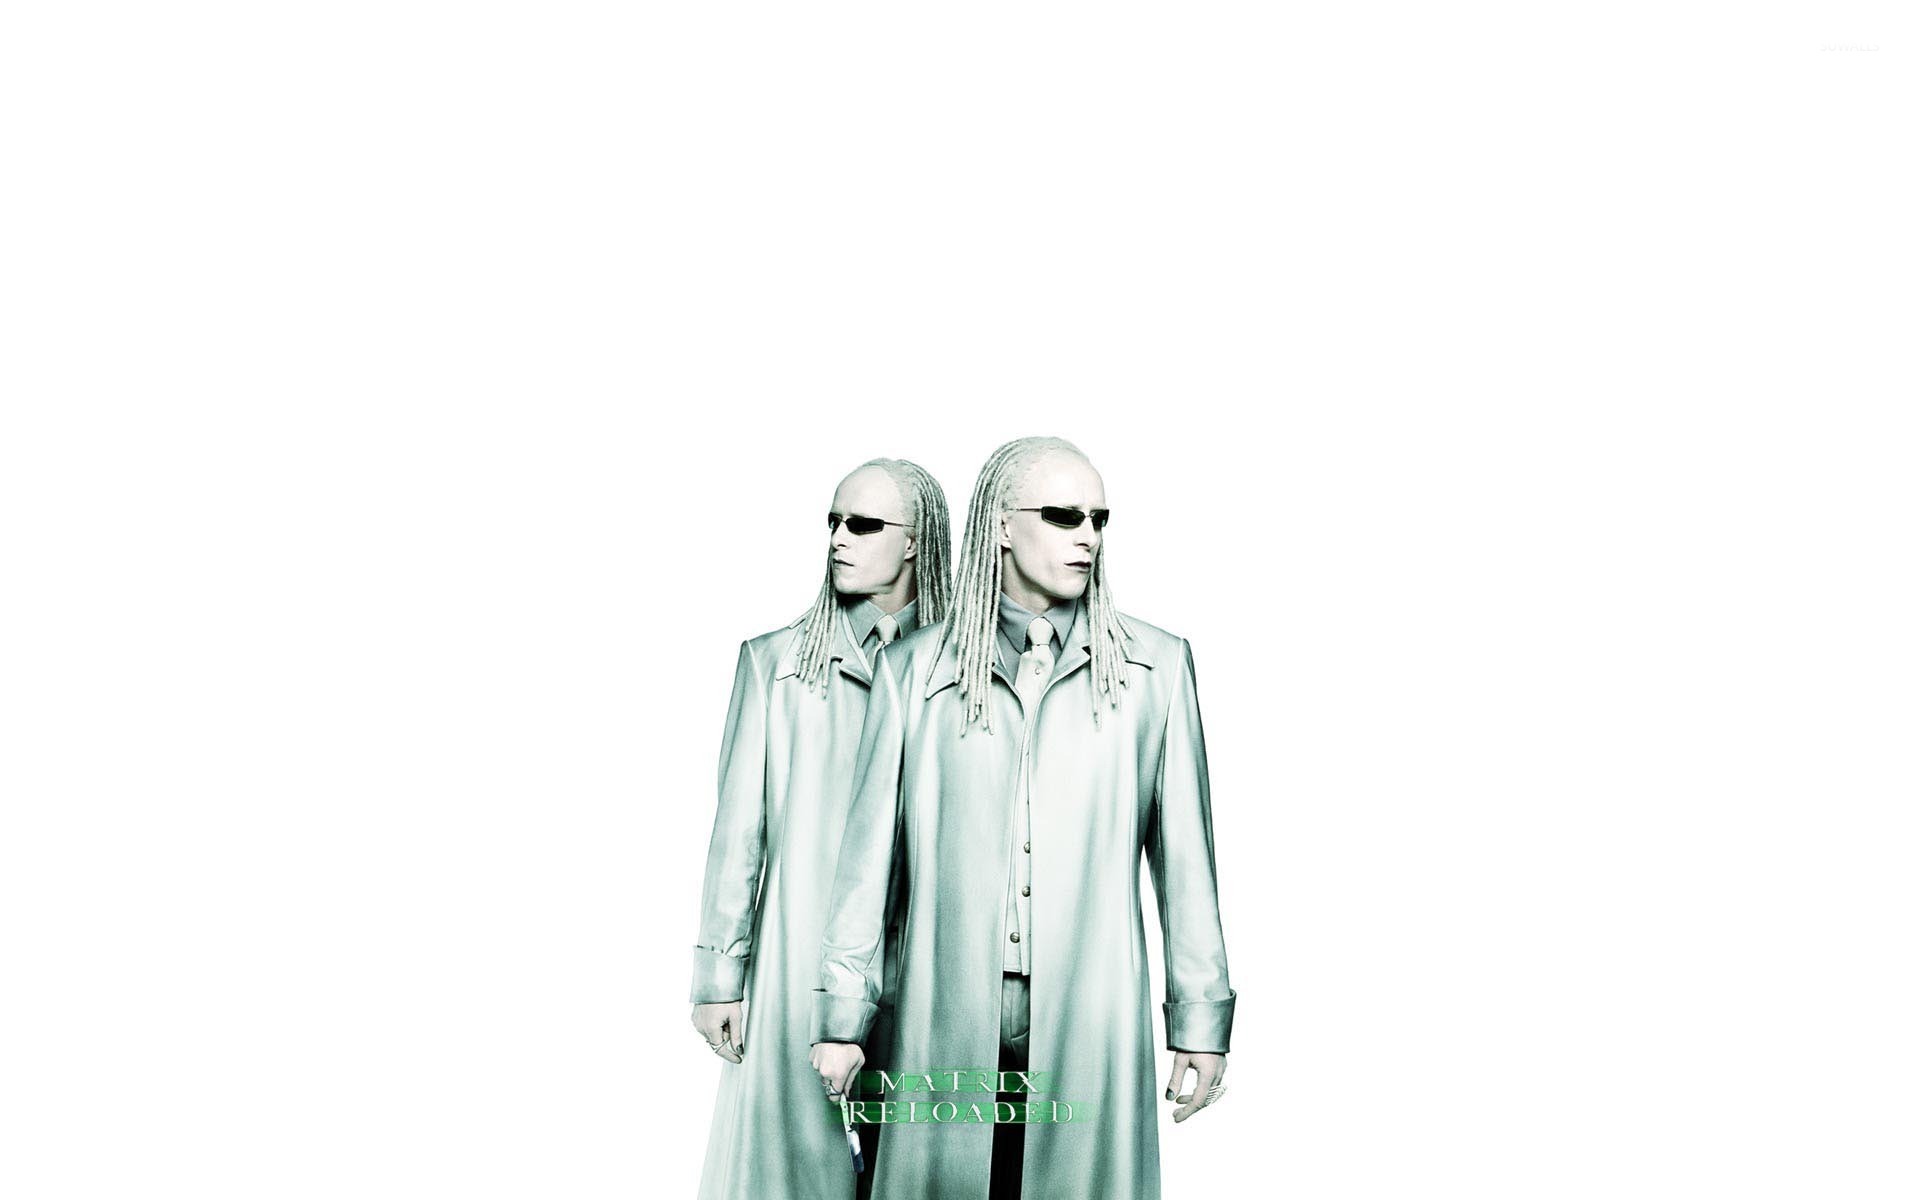 Twins - Matrix Reloaded wallpaper - Movie wallpapers - #27819